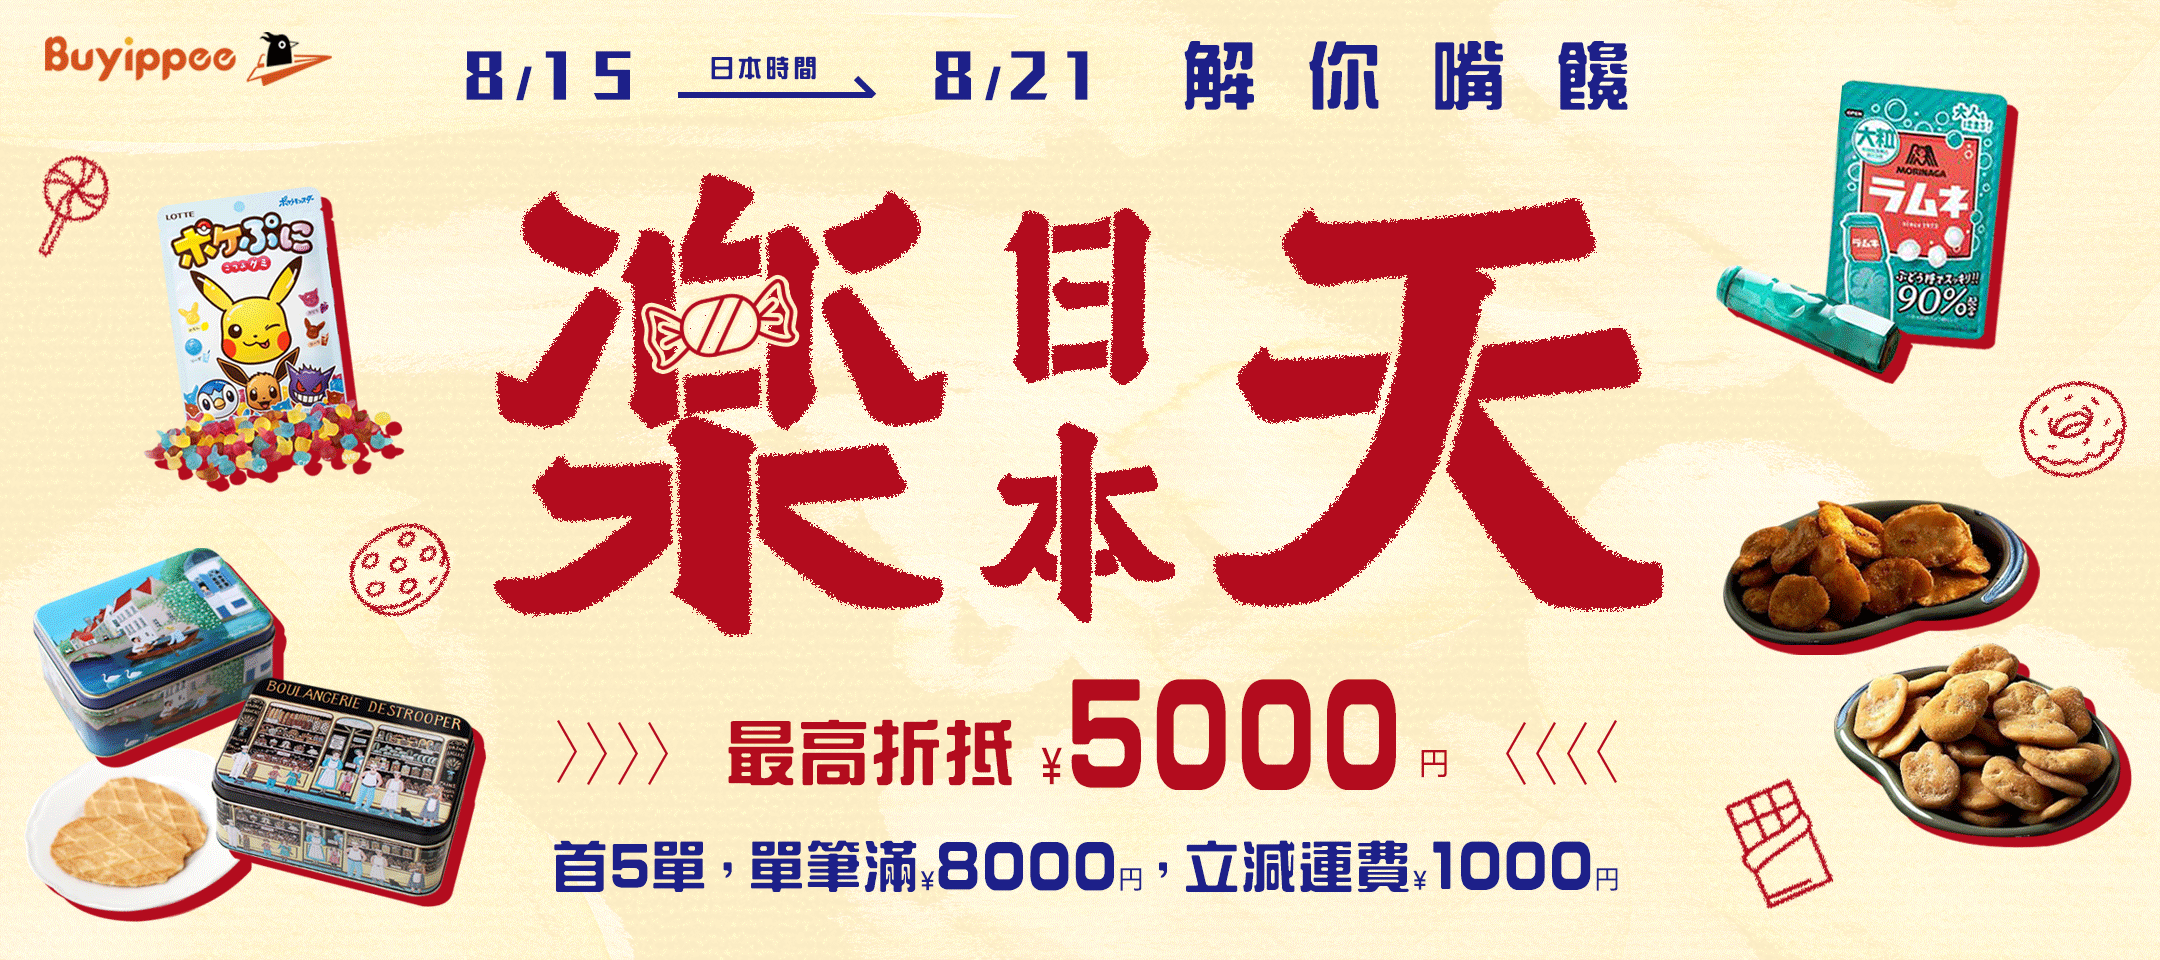 Buyippee X Rakuten聯名企劃!精選日本樂天超人氣美食,使用buyippee代運回台,最高折抵5000日圓!